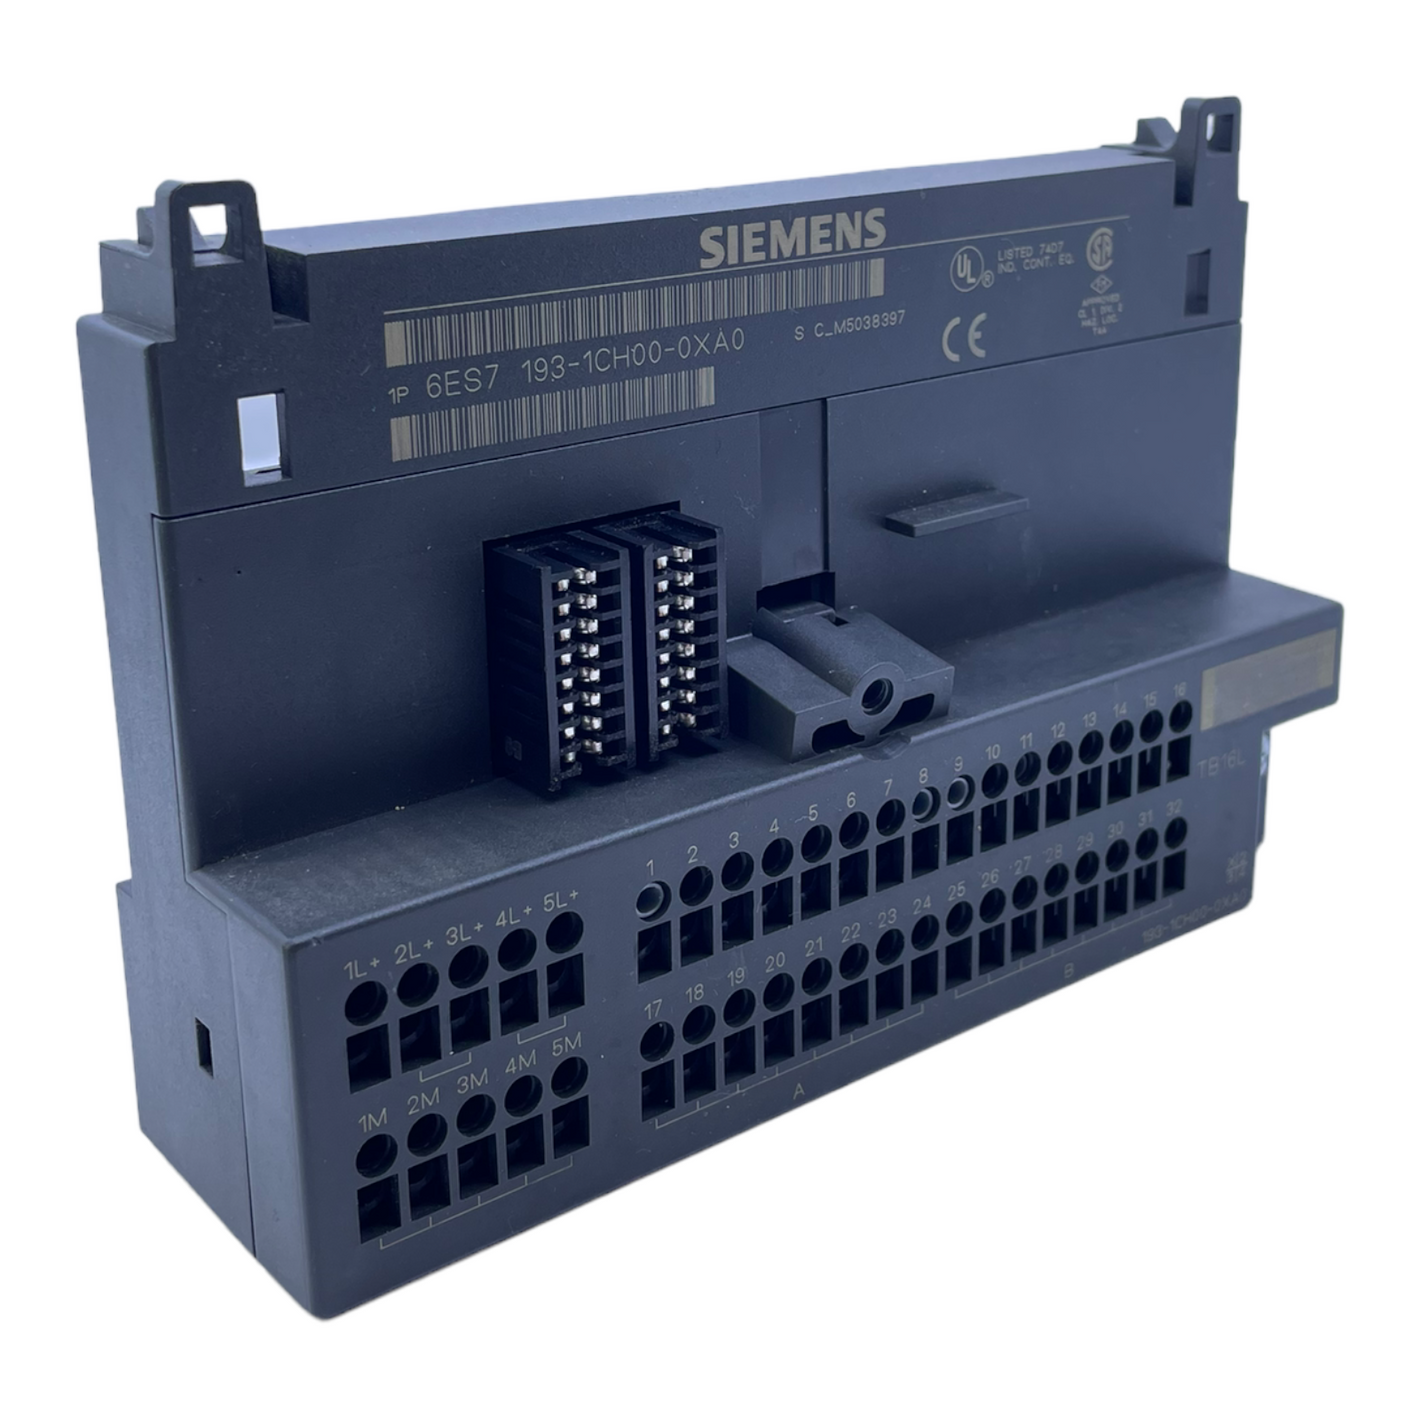 Siemens 6ES7193-1CH00-0XA0 Terminal block 16 channels for ET 2 Terminal block